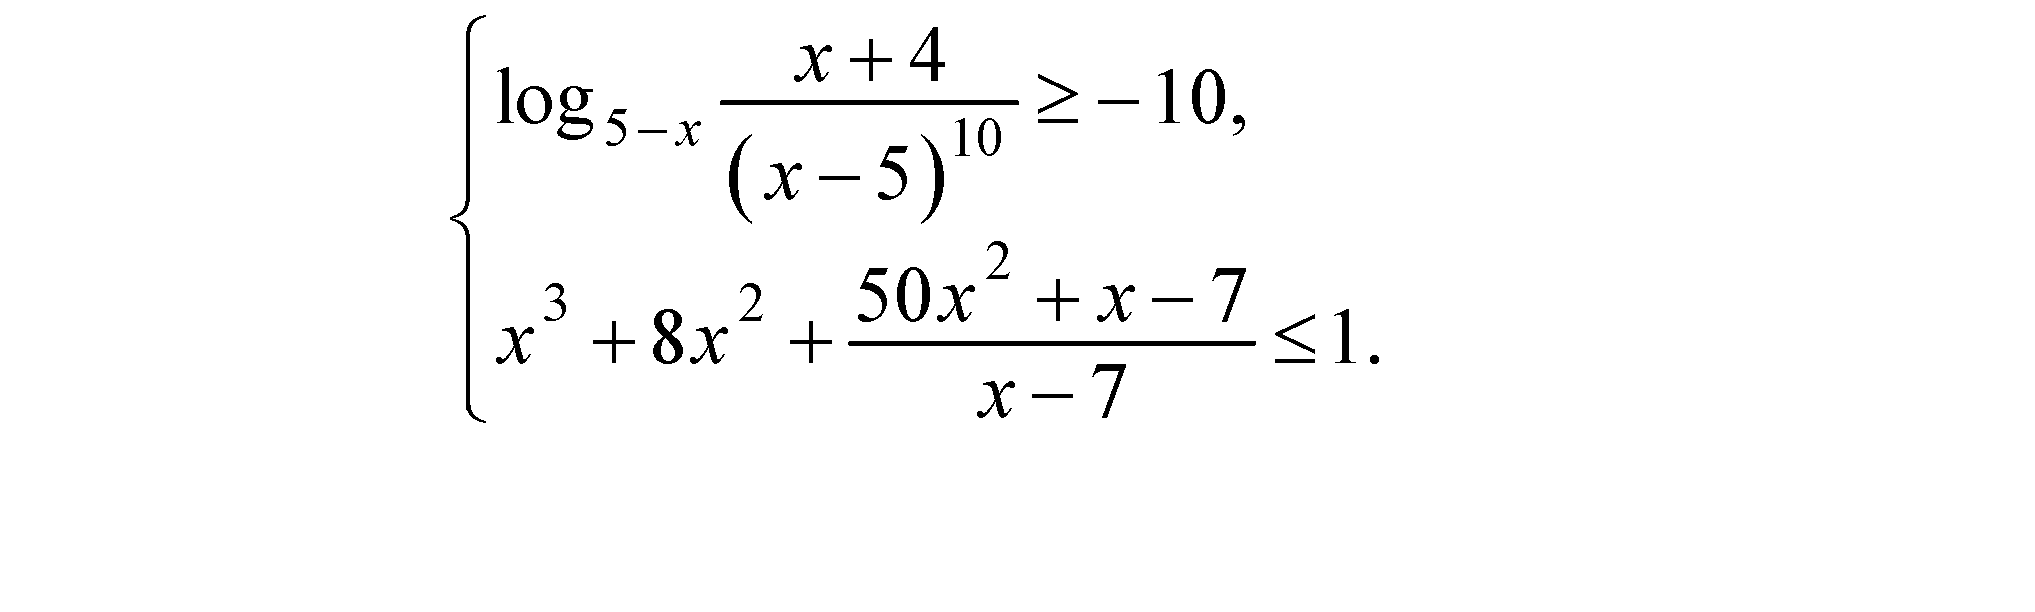 Log x 5 2 решение. Log5-x x+4/x-5 10. Log5-x x+4/x-5 10 10. Log5(4x+1)>-1. Log5 4x 7 +1 0.